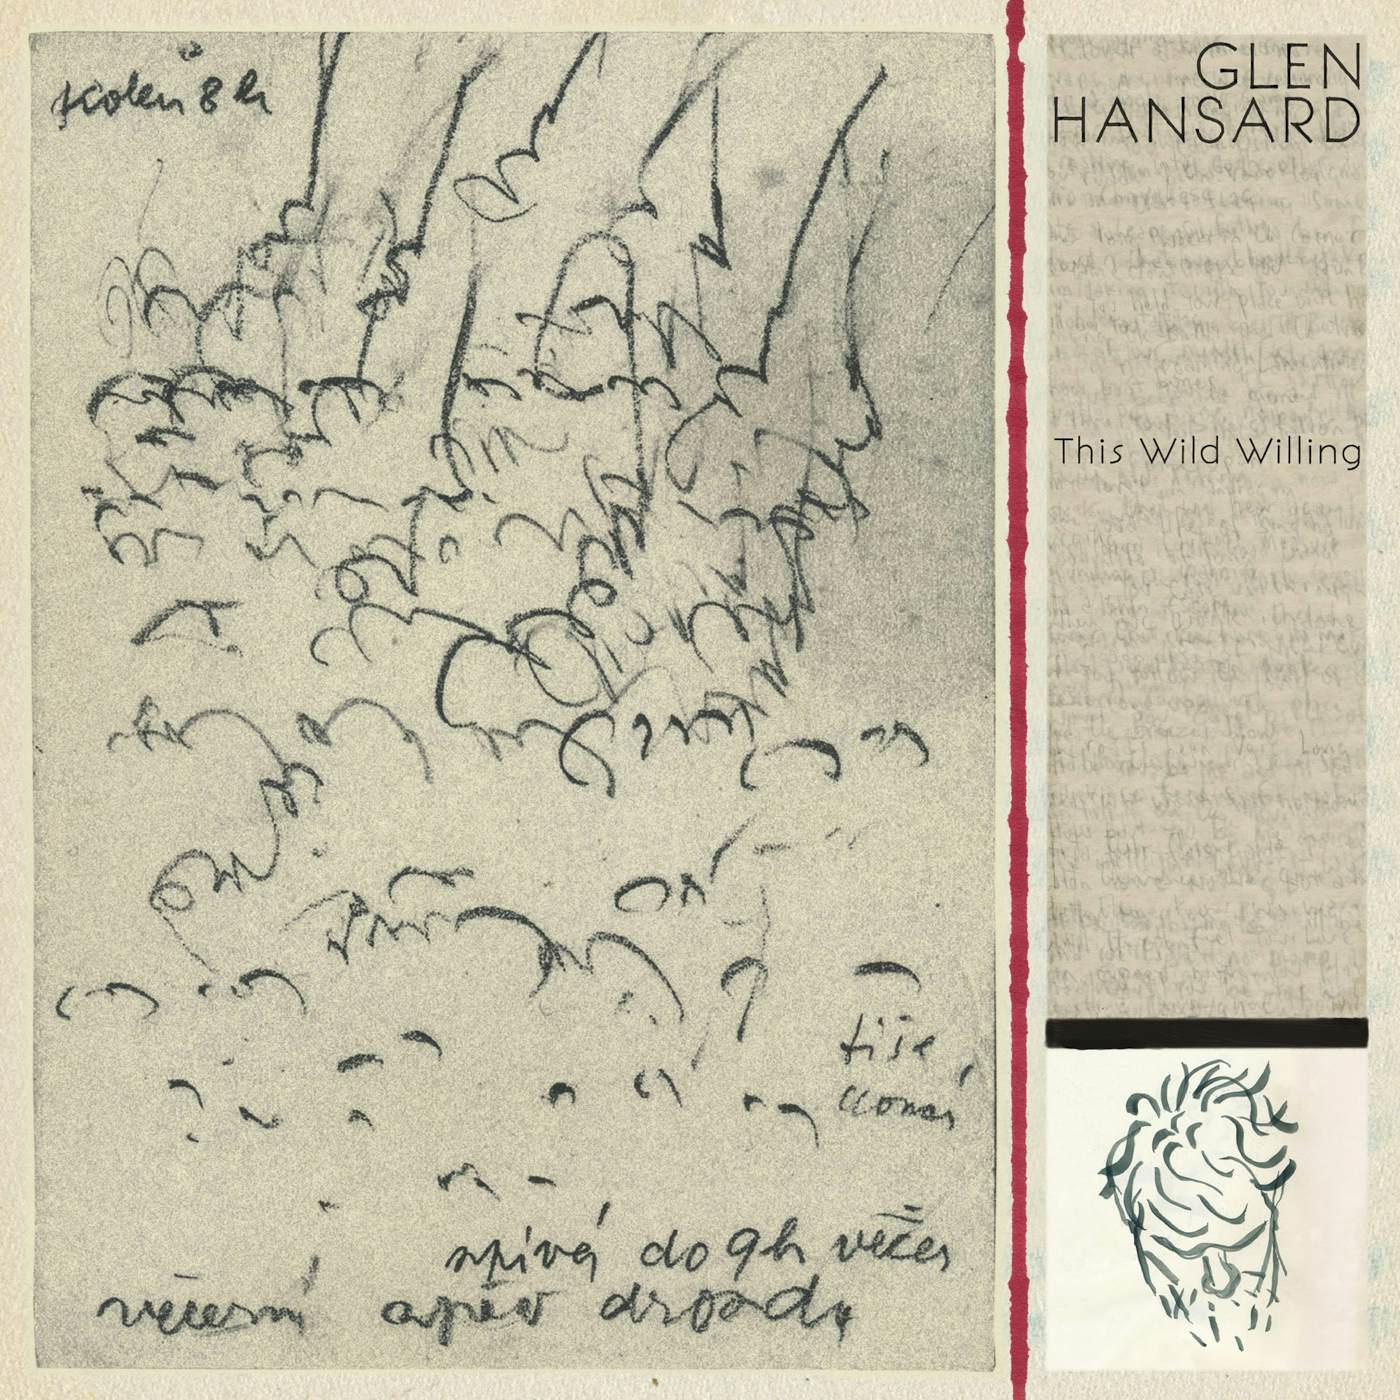 Glen Hansard This Wild Willing Vinyl Record